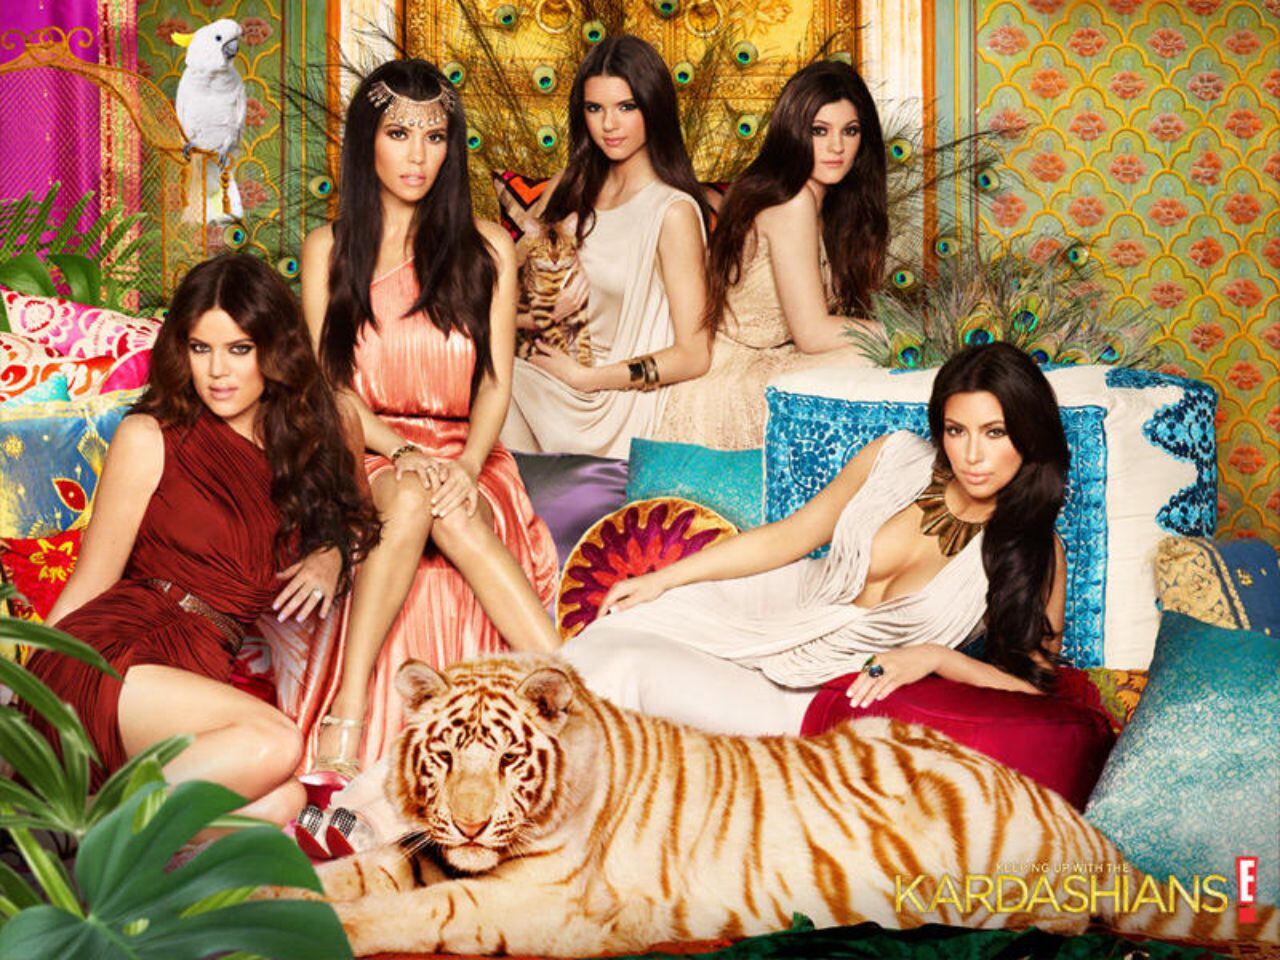 Keeping up with the Kardashians: Temporada 6